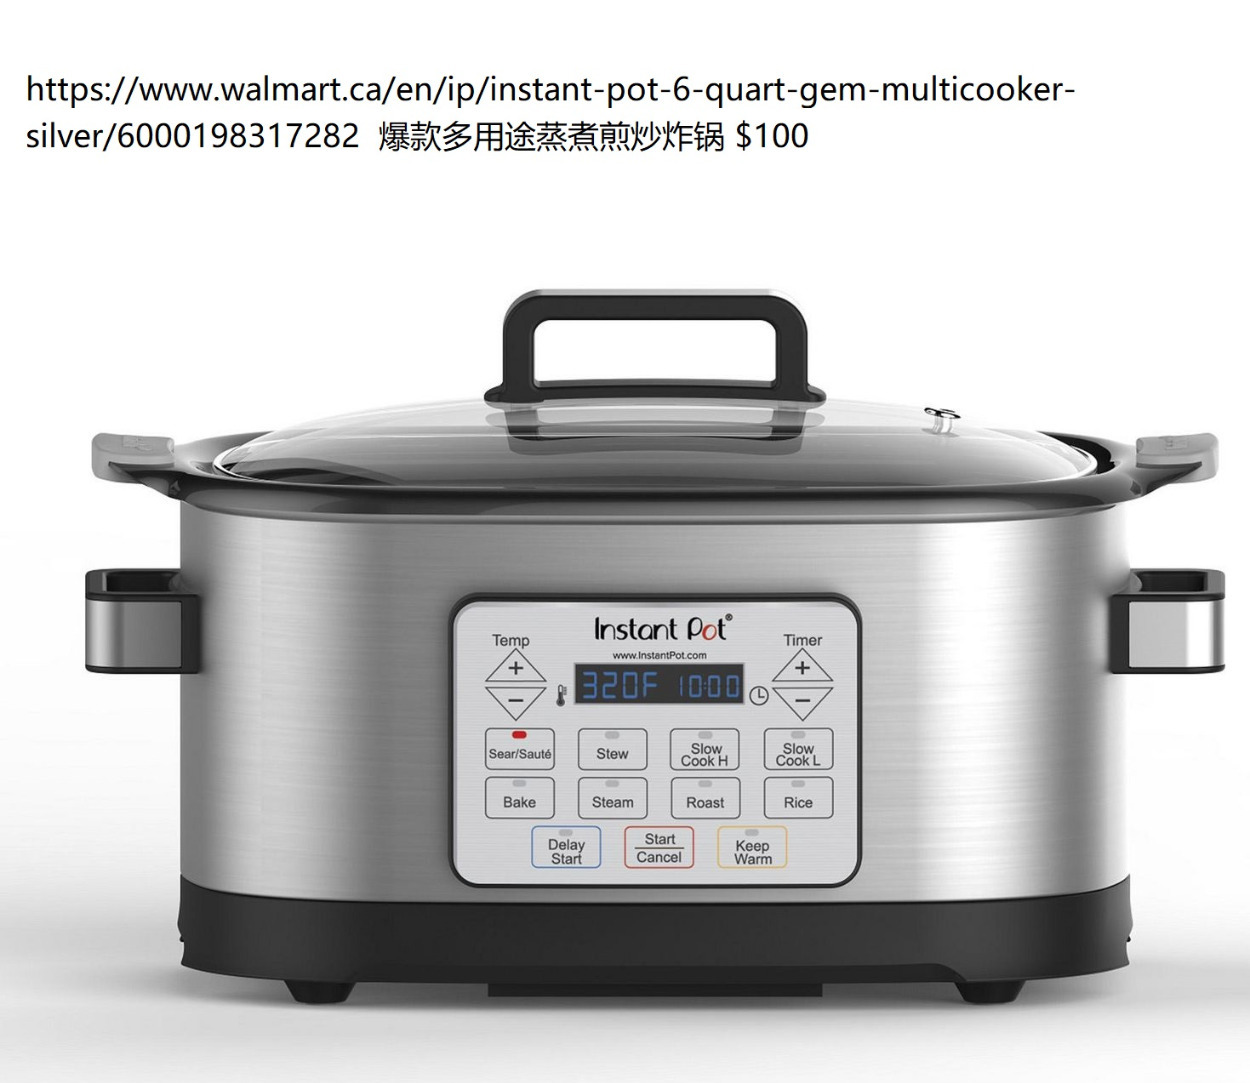 210603183443_Instant Pot 6 Quart Gem Multicooker-8-1.jpg